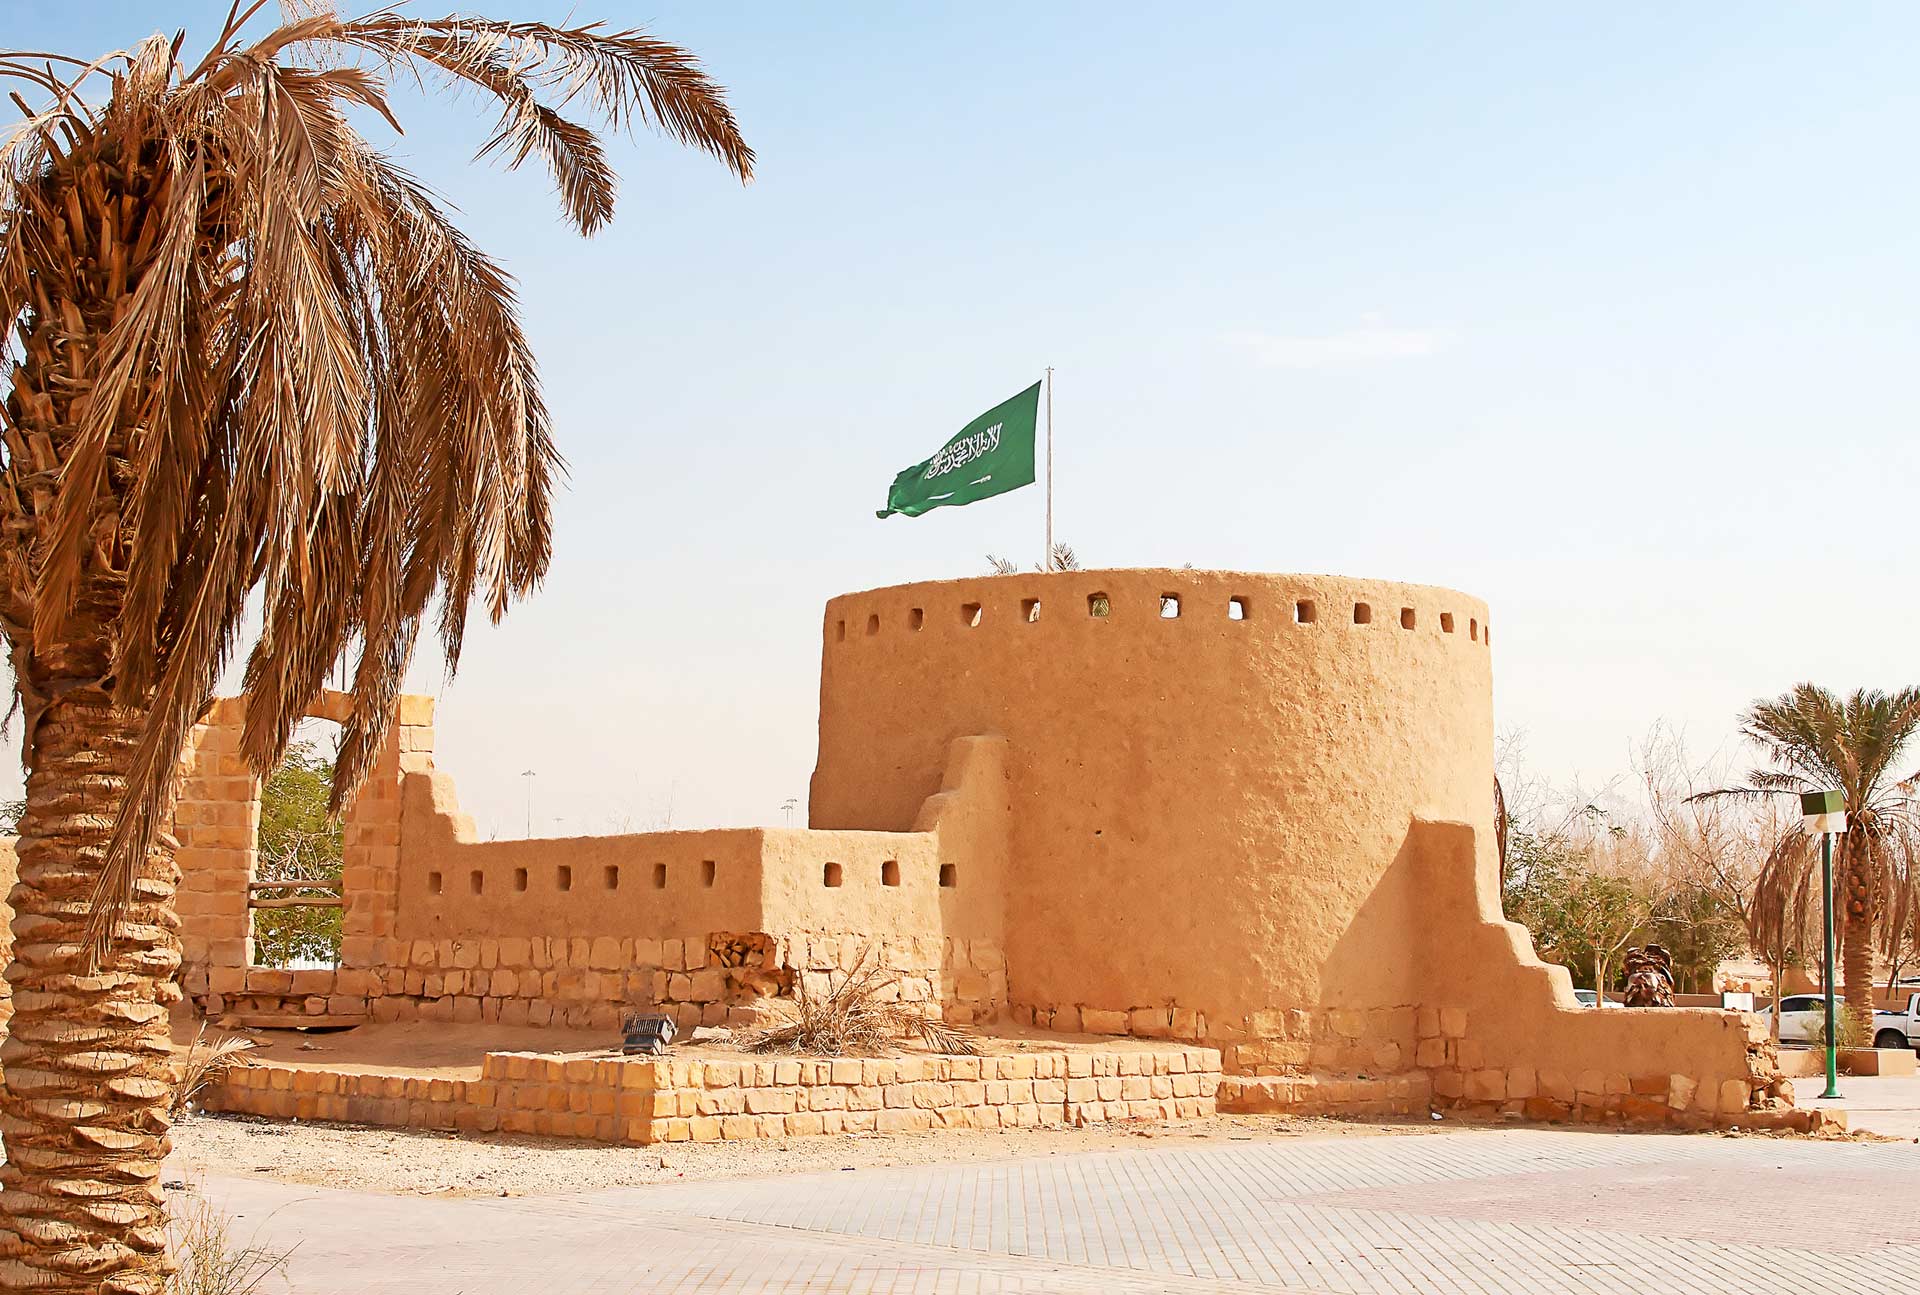 Ruins of Diriyah, old city near Riyadh, Saudi Arabia